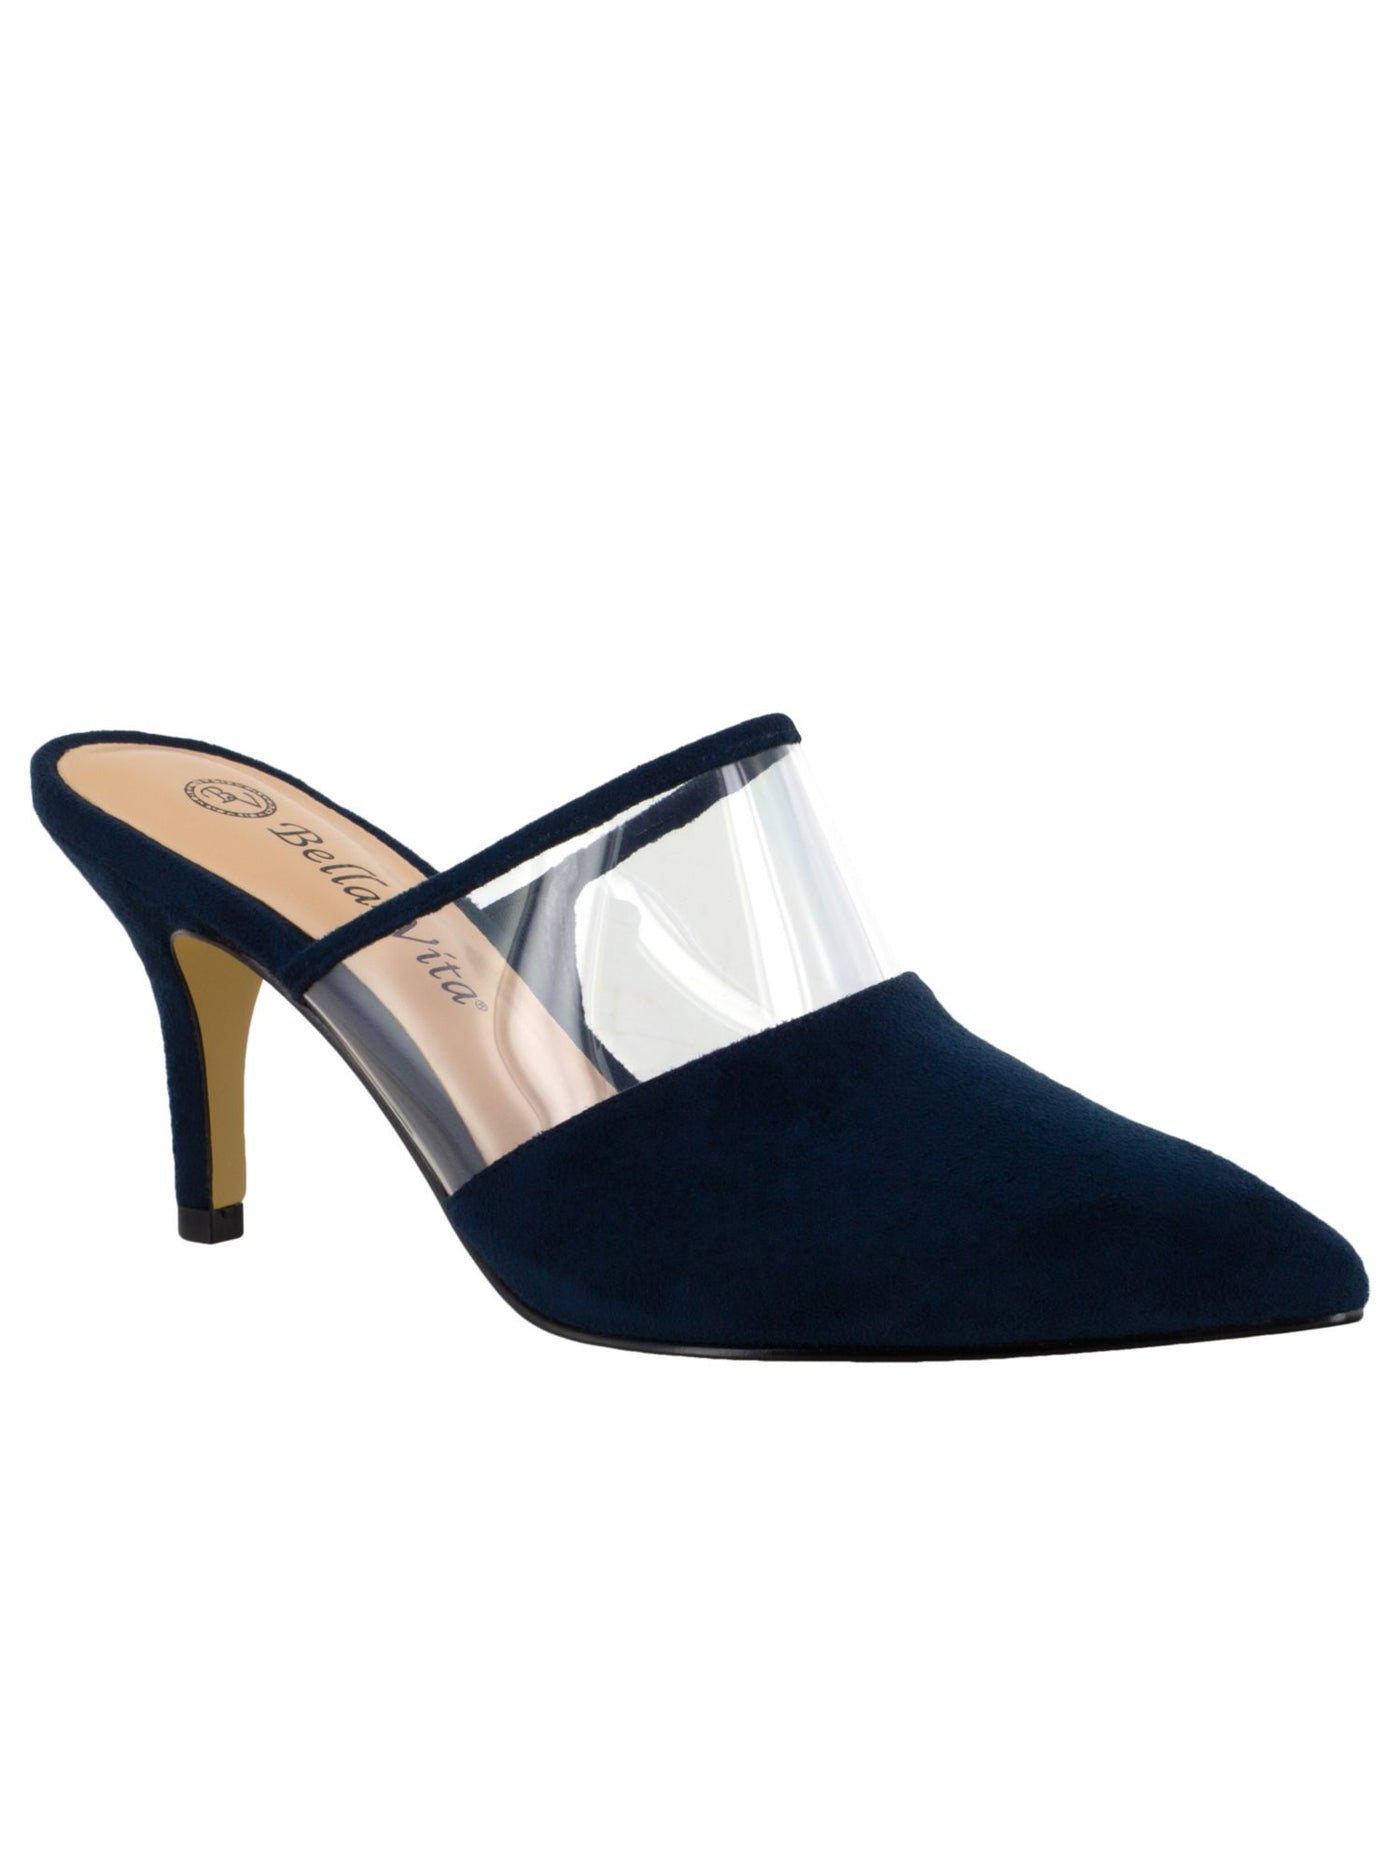 BELLA VITA Womens Black Pointed Toe Stiletto Slip On Leather Dress Heeled Mules Shoes 9.5